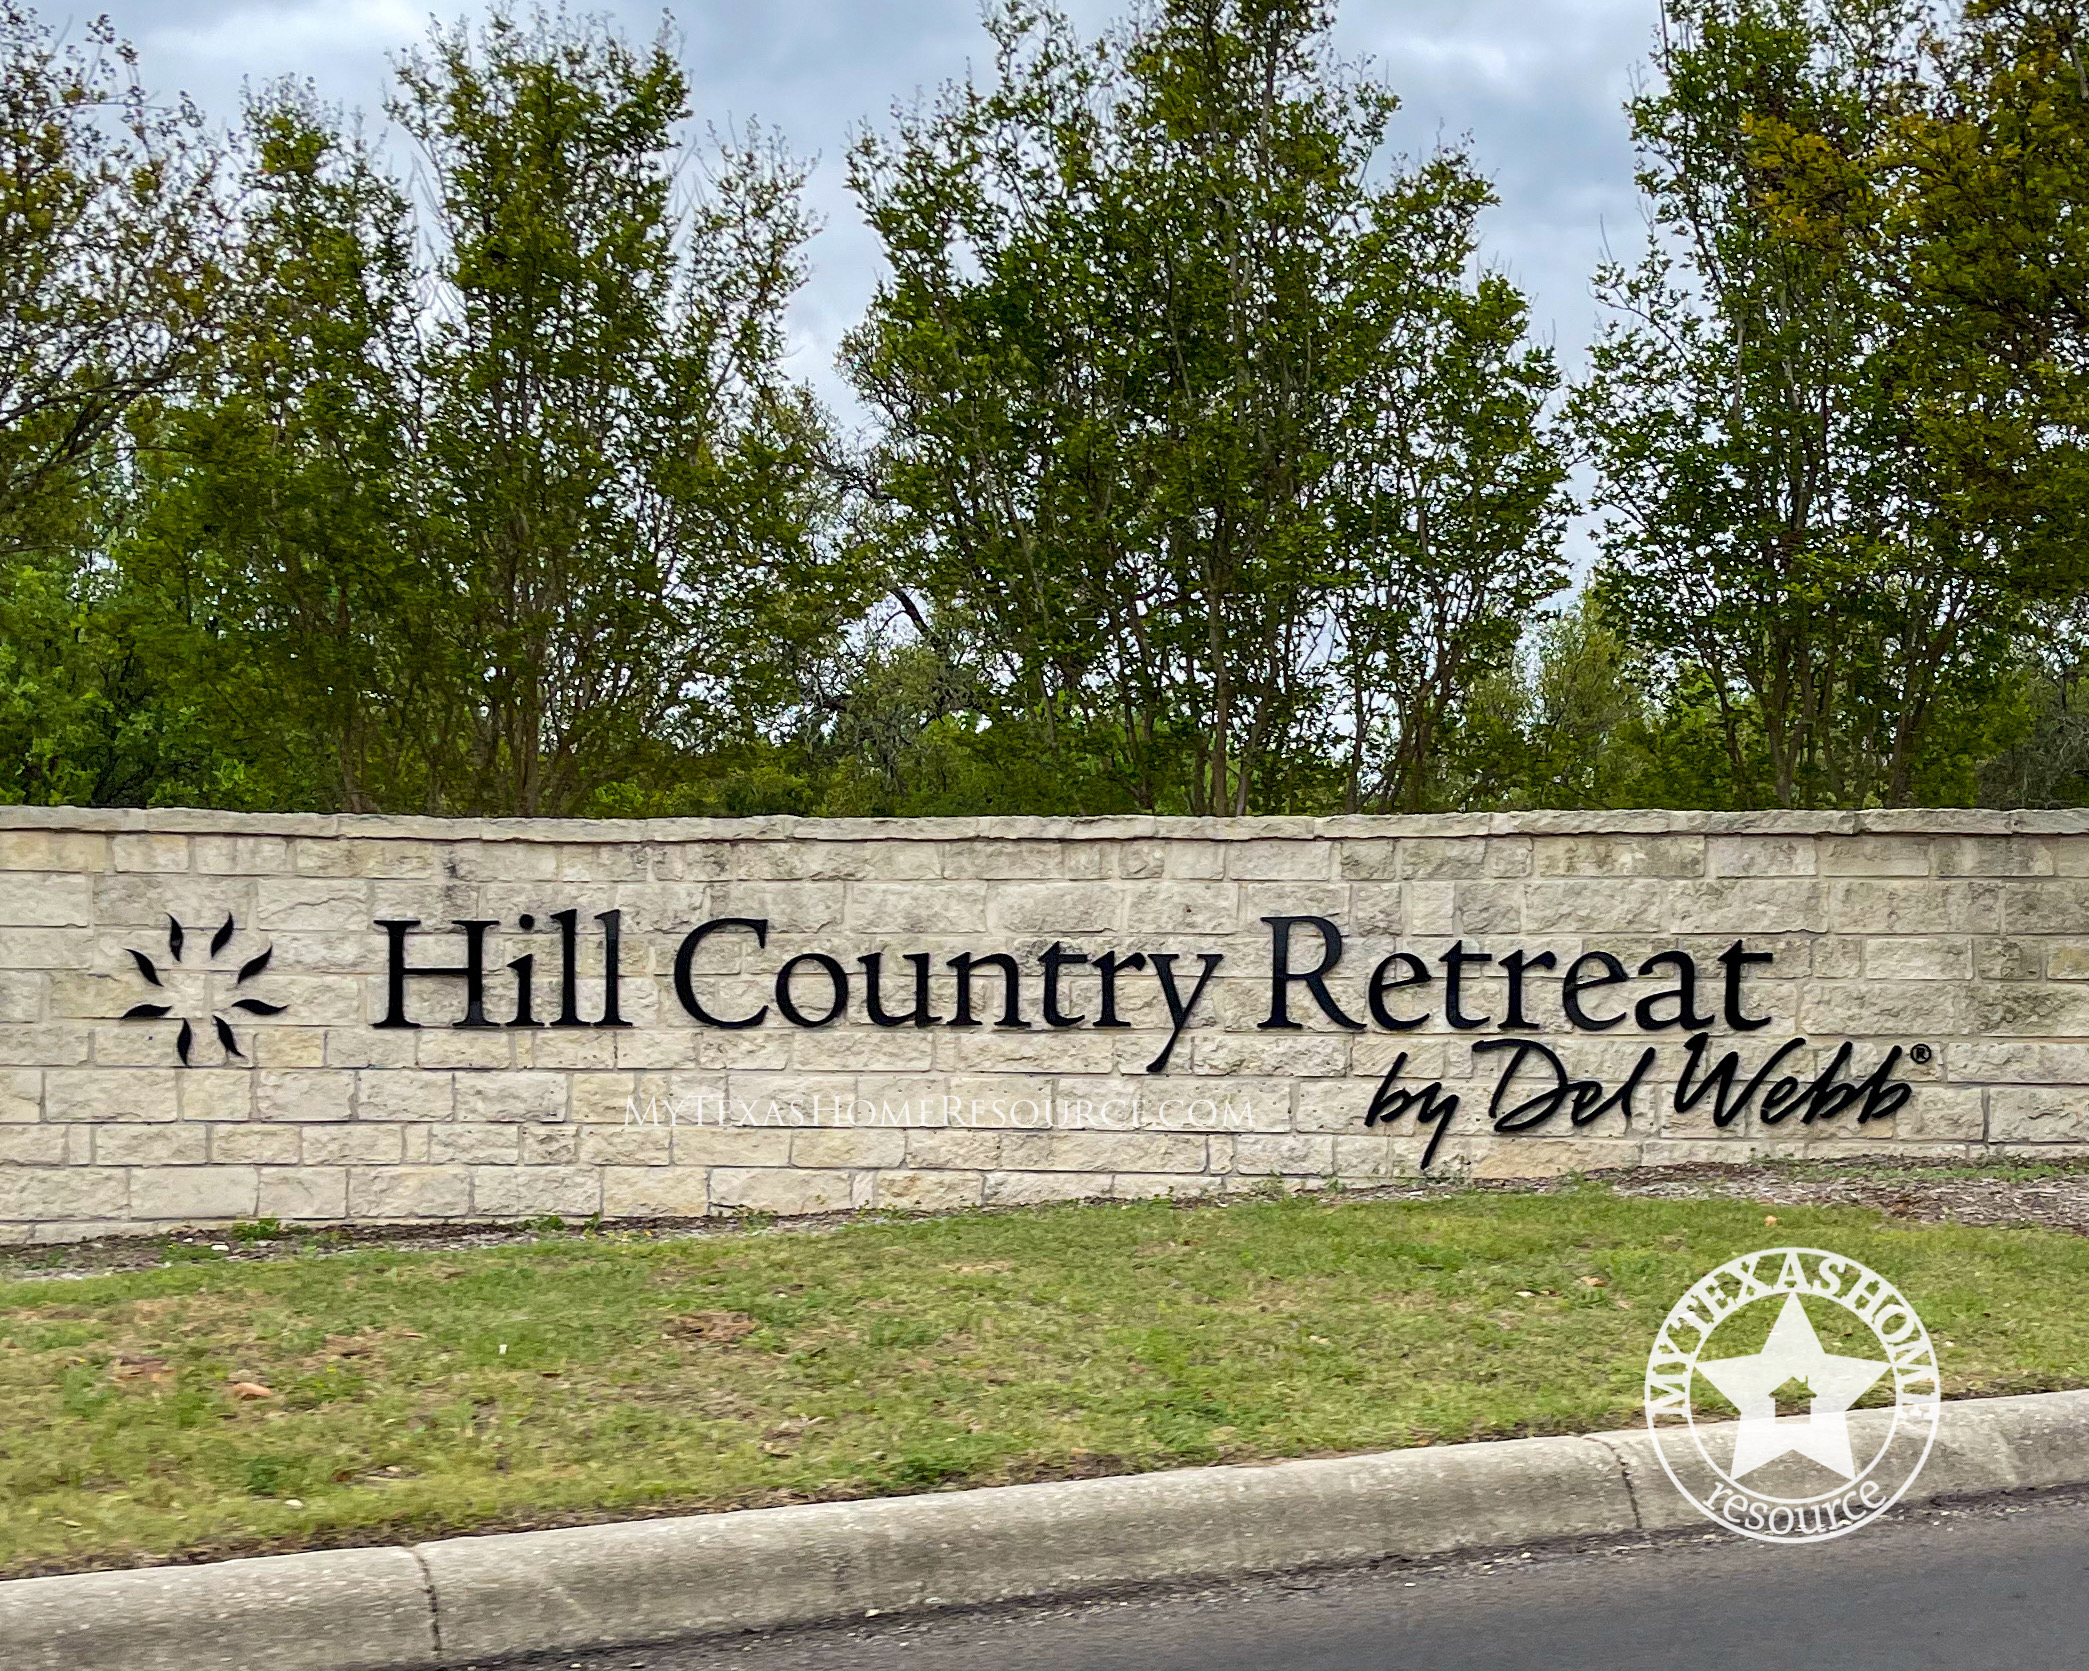 Hill Country Retreat Community San Antonio, TX